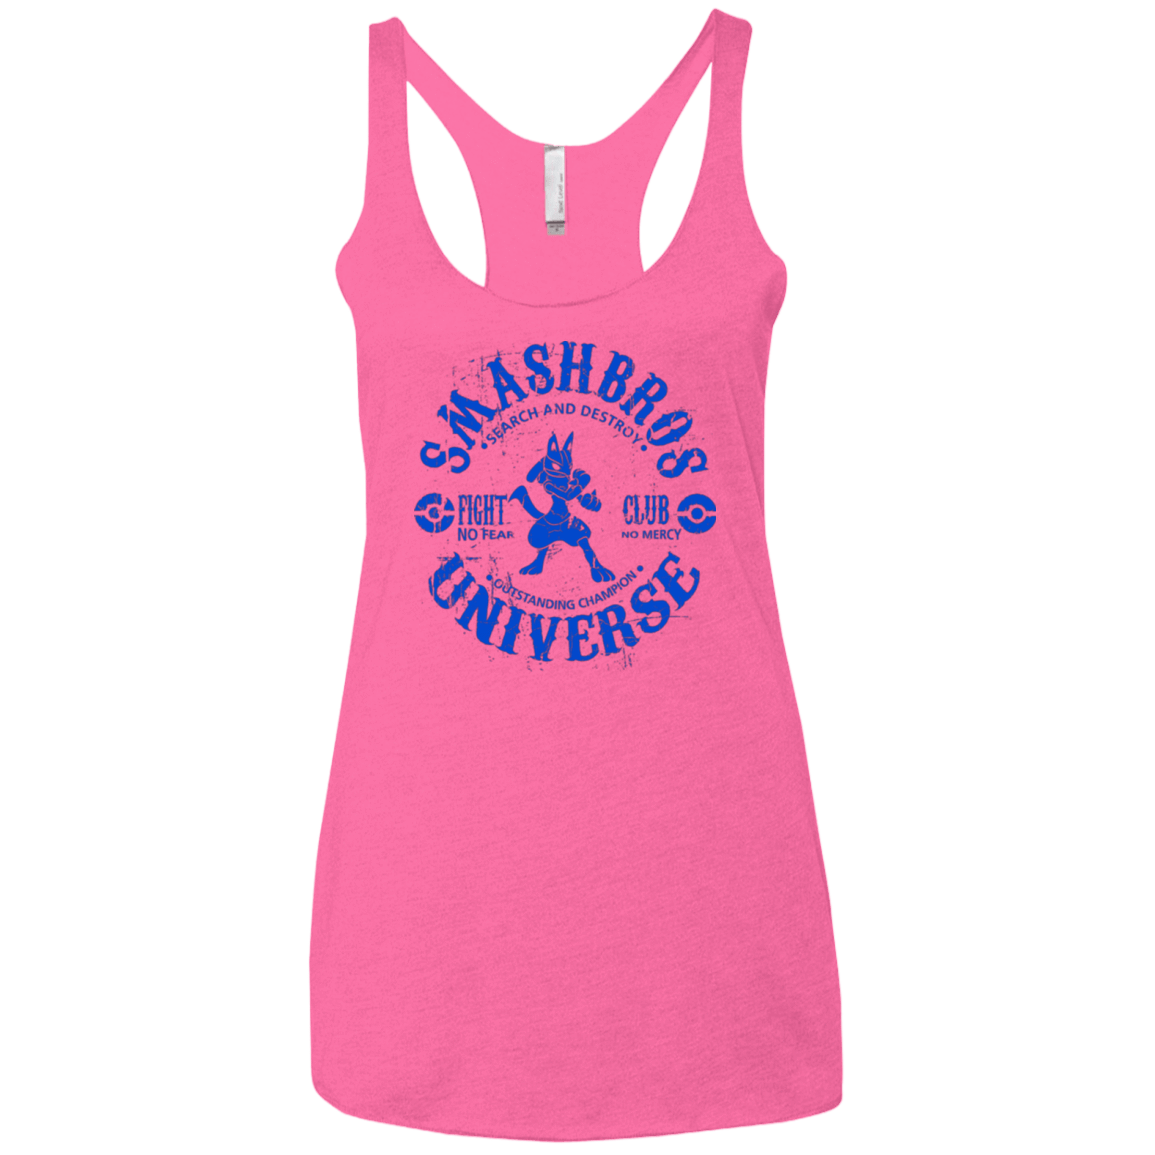 T-Shirts Vintage Pink / X-Small SAFFRON CHAMPION 3 Women's Triblend Racerback Tank